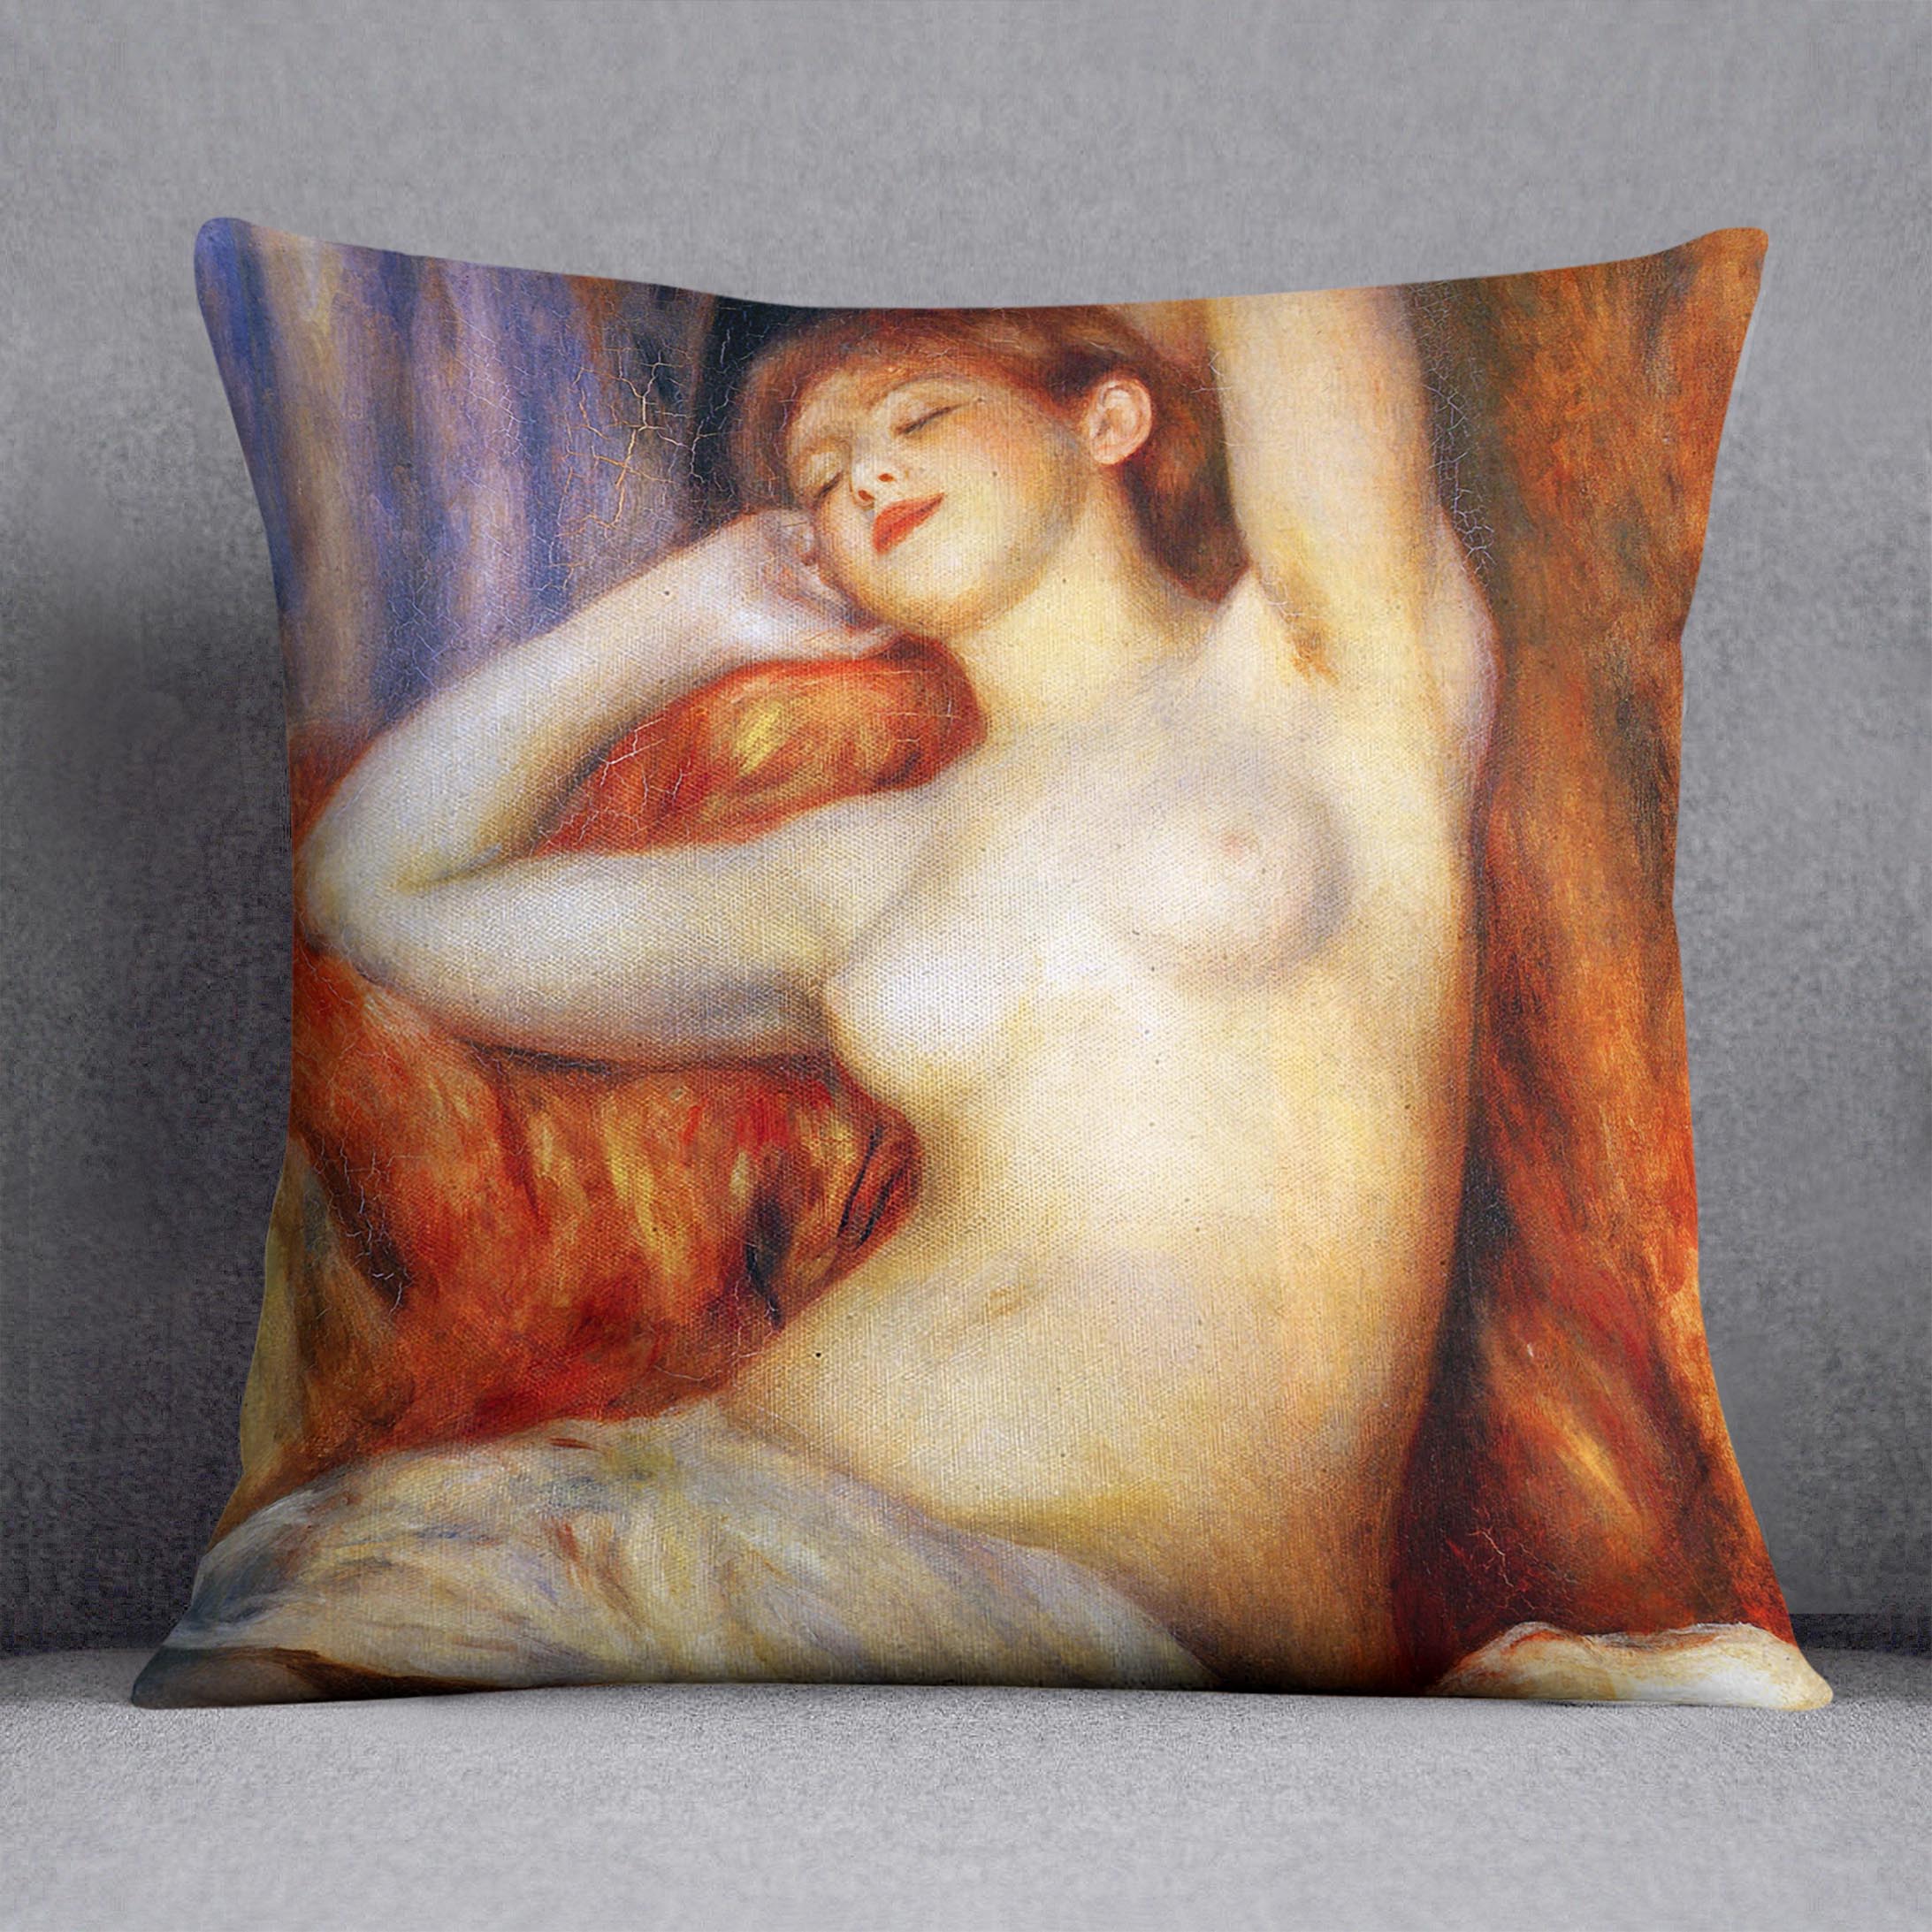 The sleeping by Renoir Cushion